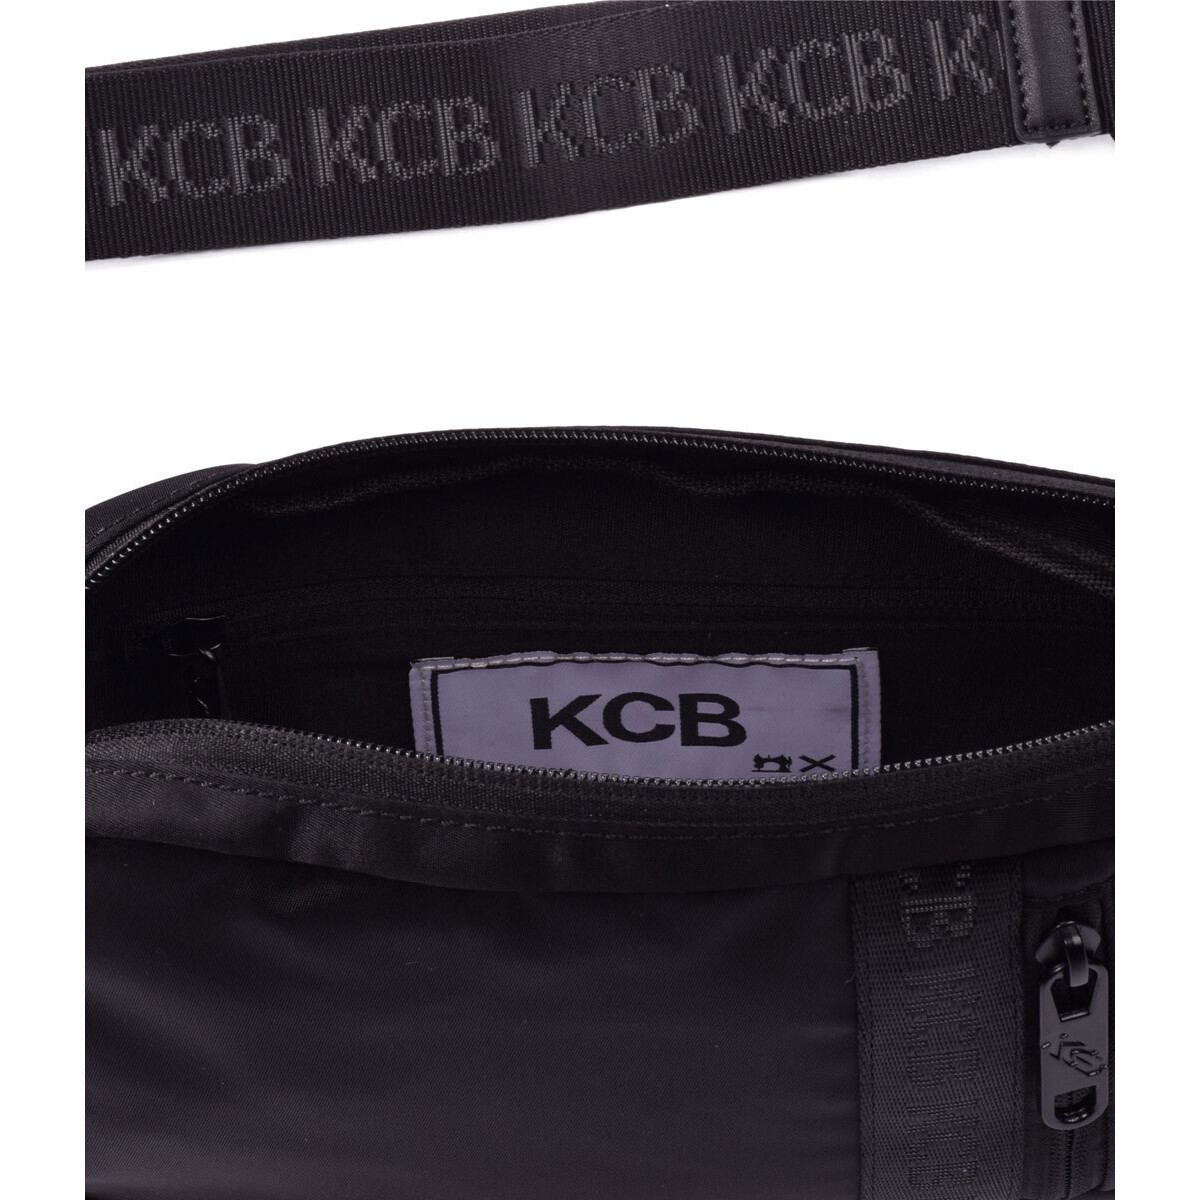 Kcb Noir 2KCB2211 CegcHYhy